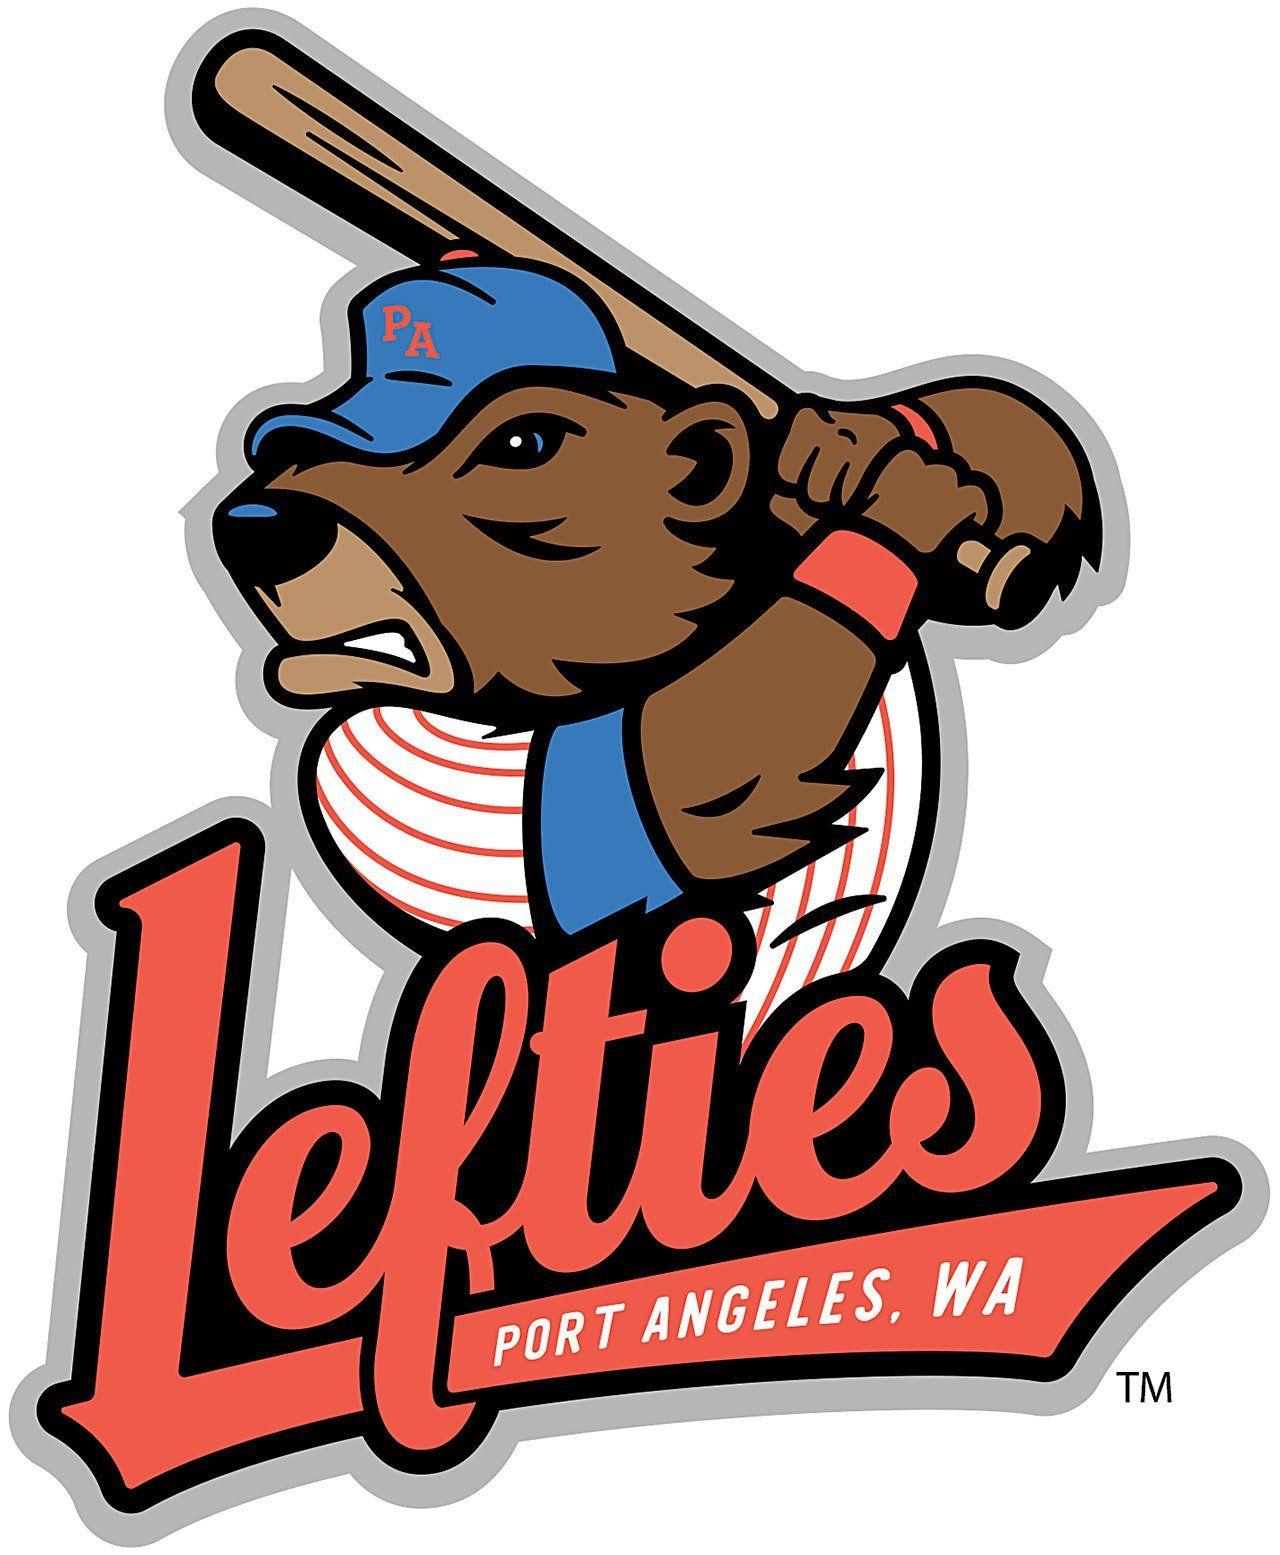 Marmot Logo - BASEBALL: Port Angeles Lefties unveil marmot logo, mascot